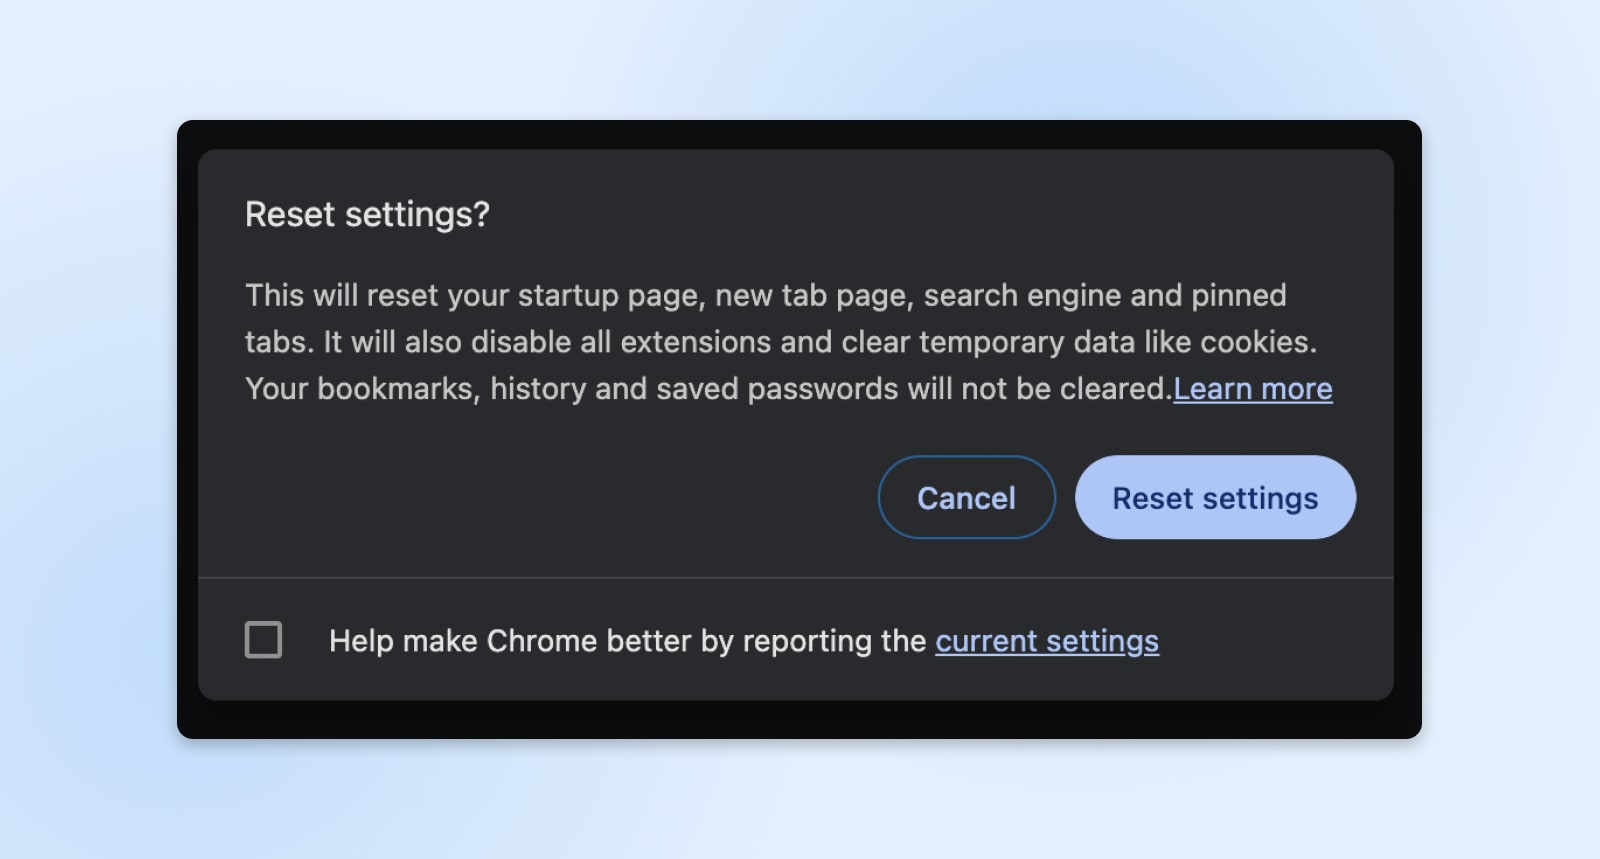 reset settings dialogue box on Chrome